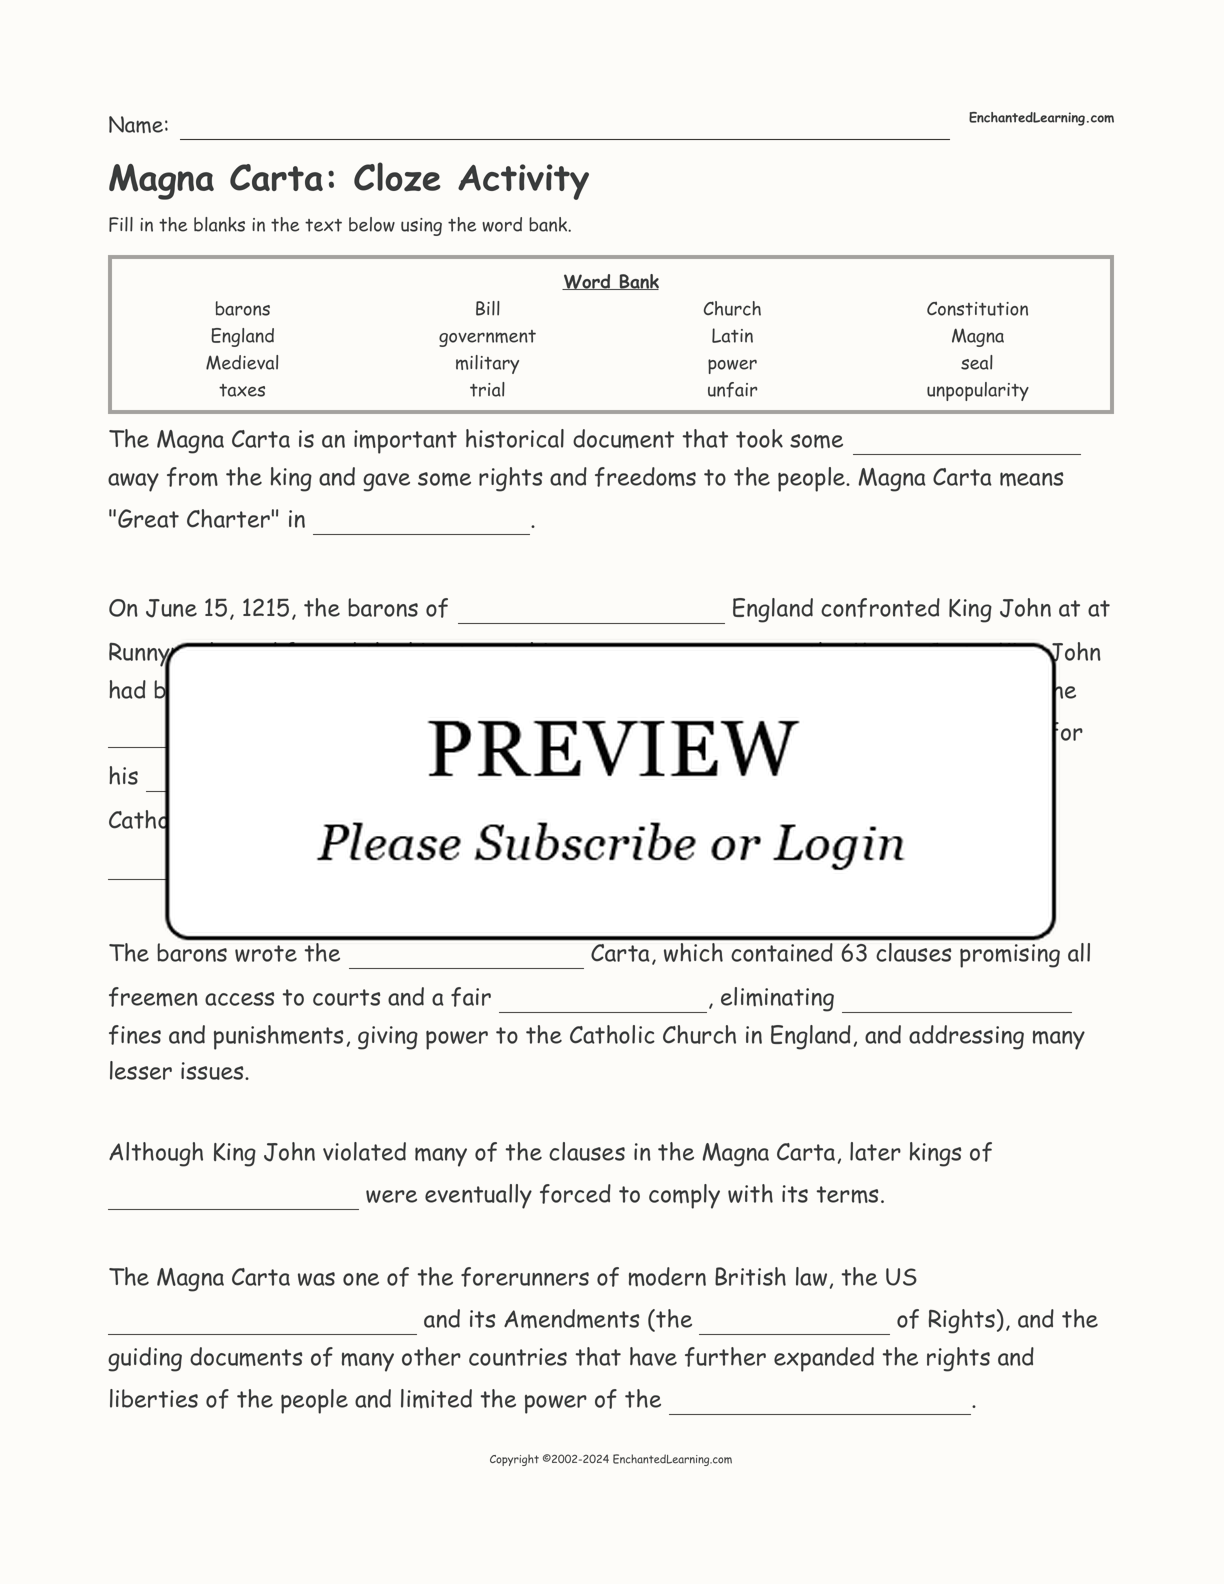 Magna Carta: Cloze Activity interactive worksheet page 1